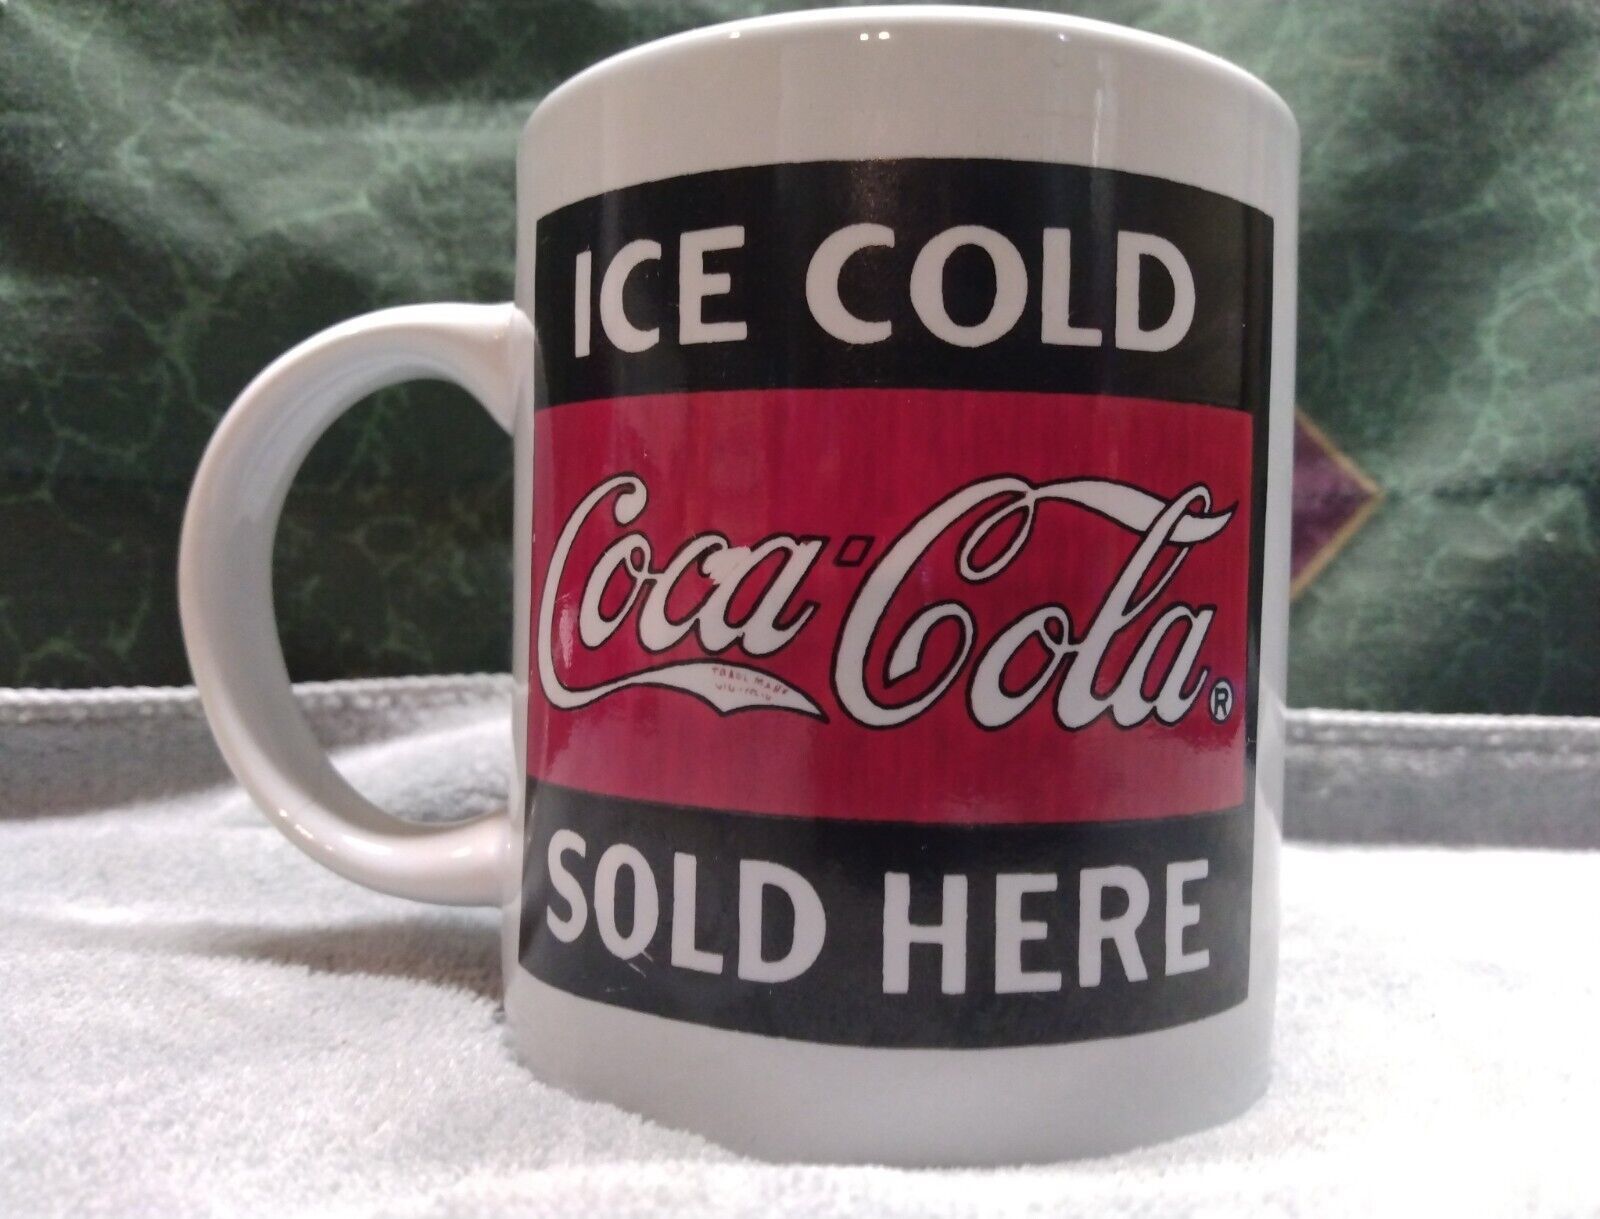 Coca Cola collectors coffer mug - $9.50